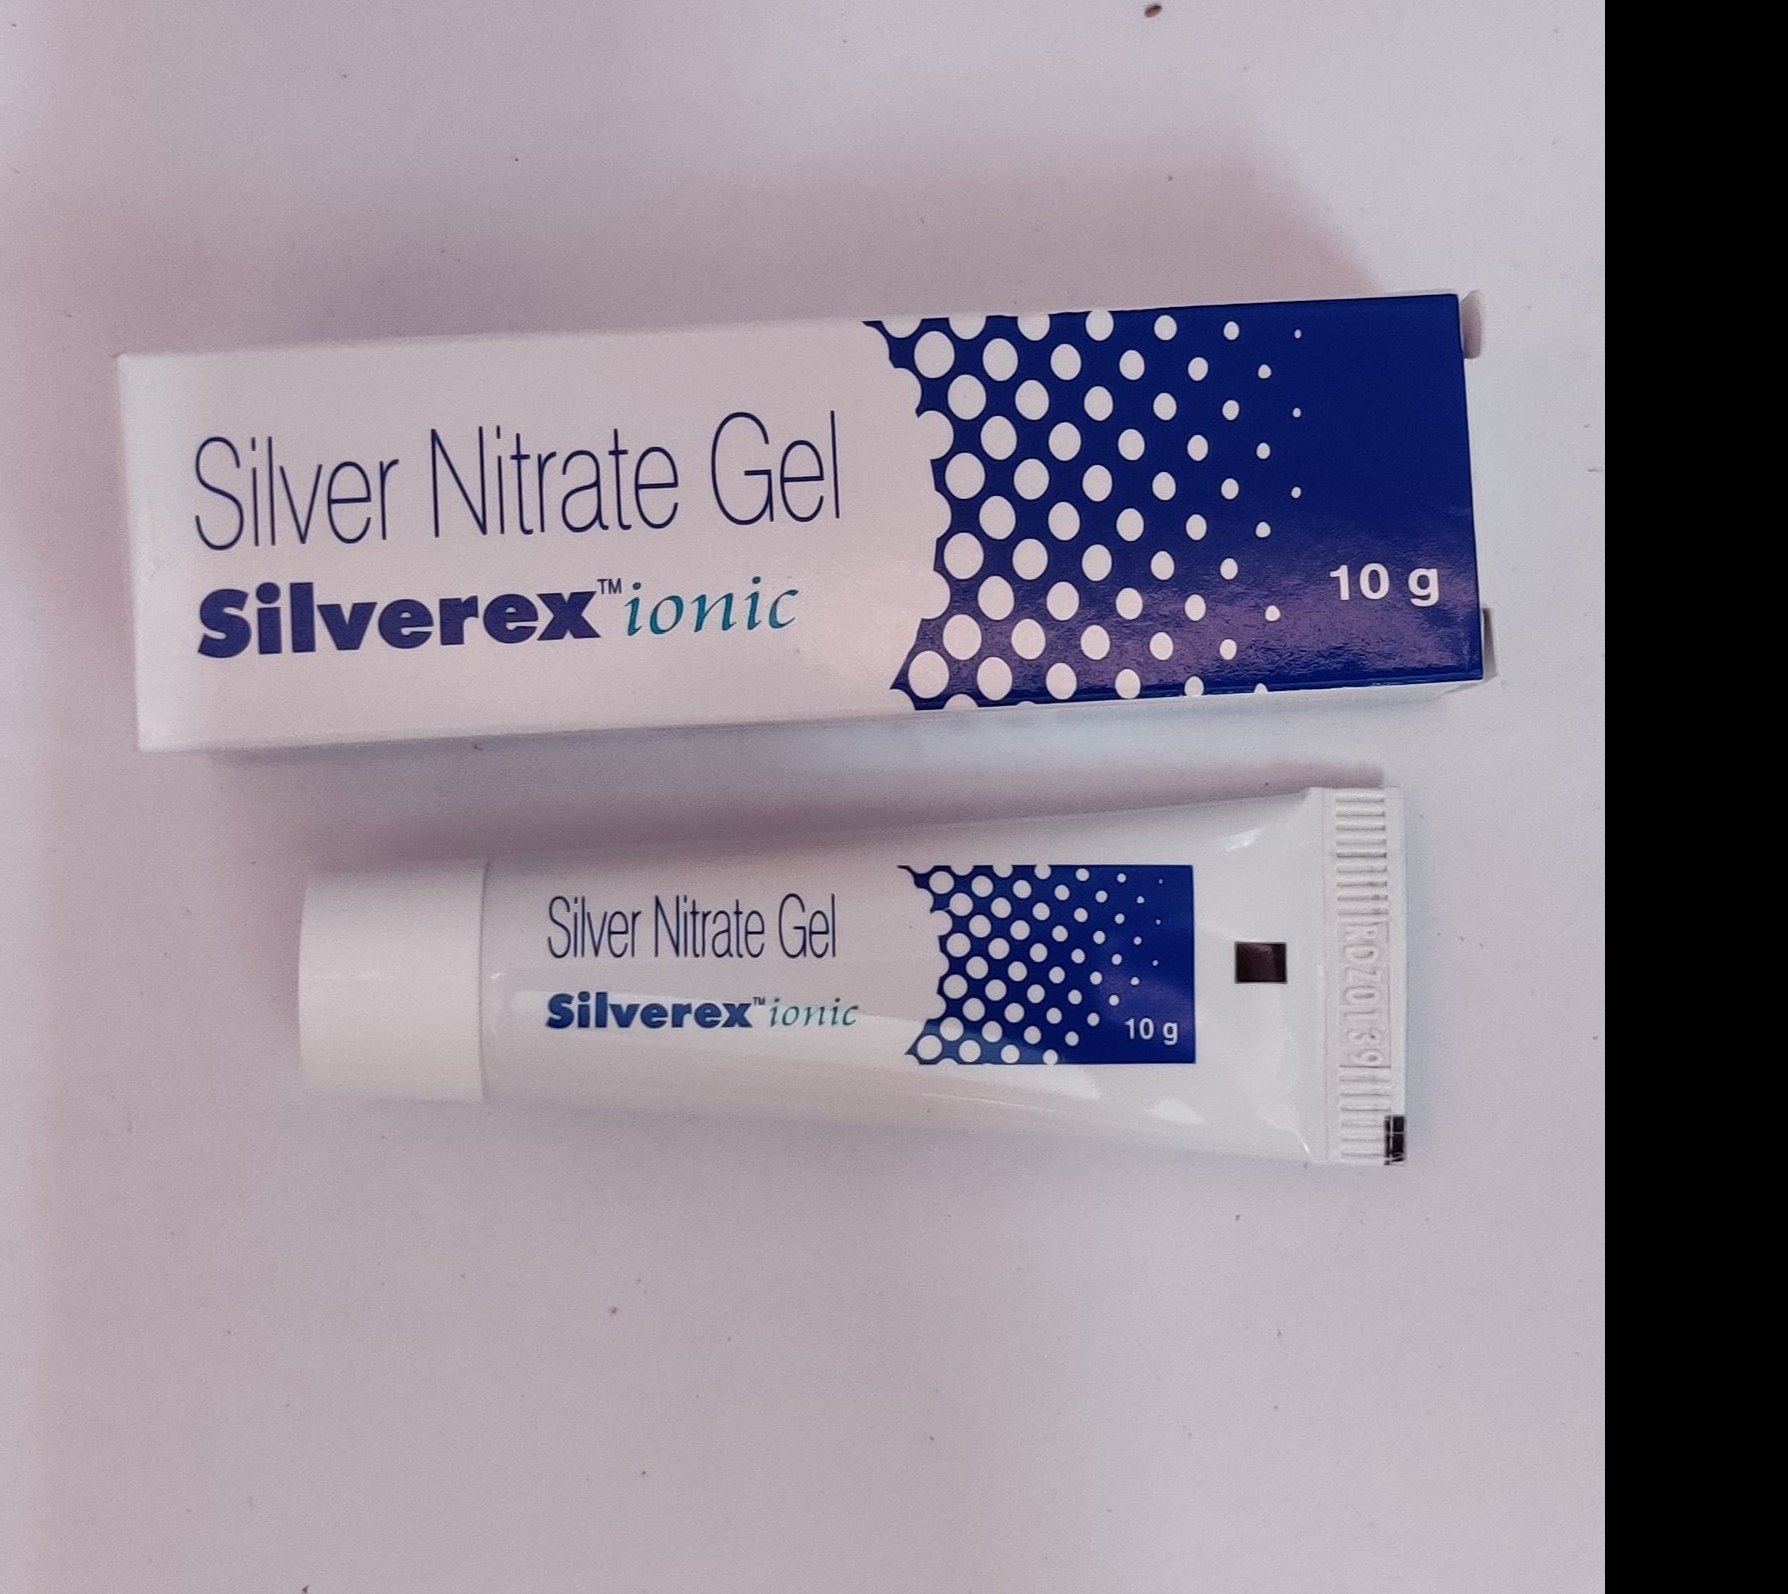 Silver Nitrate Gel